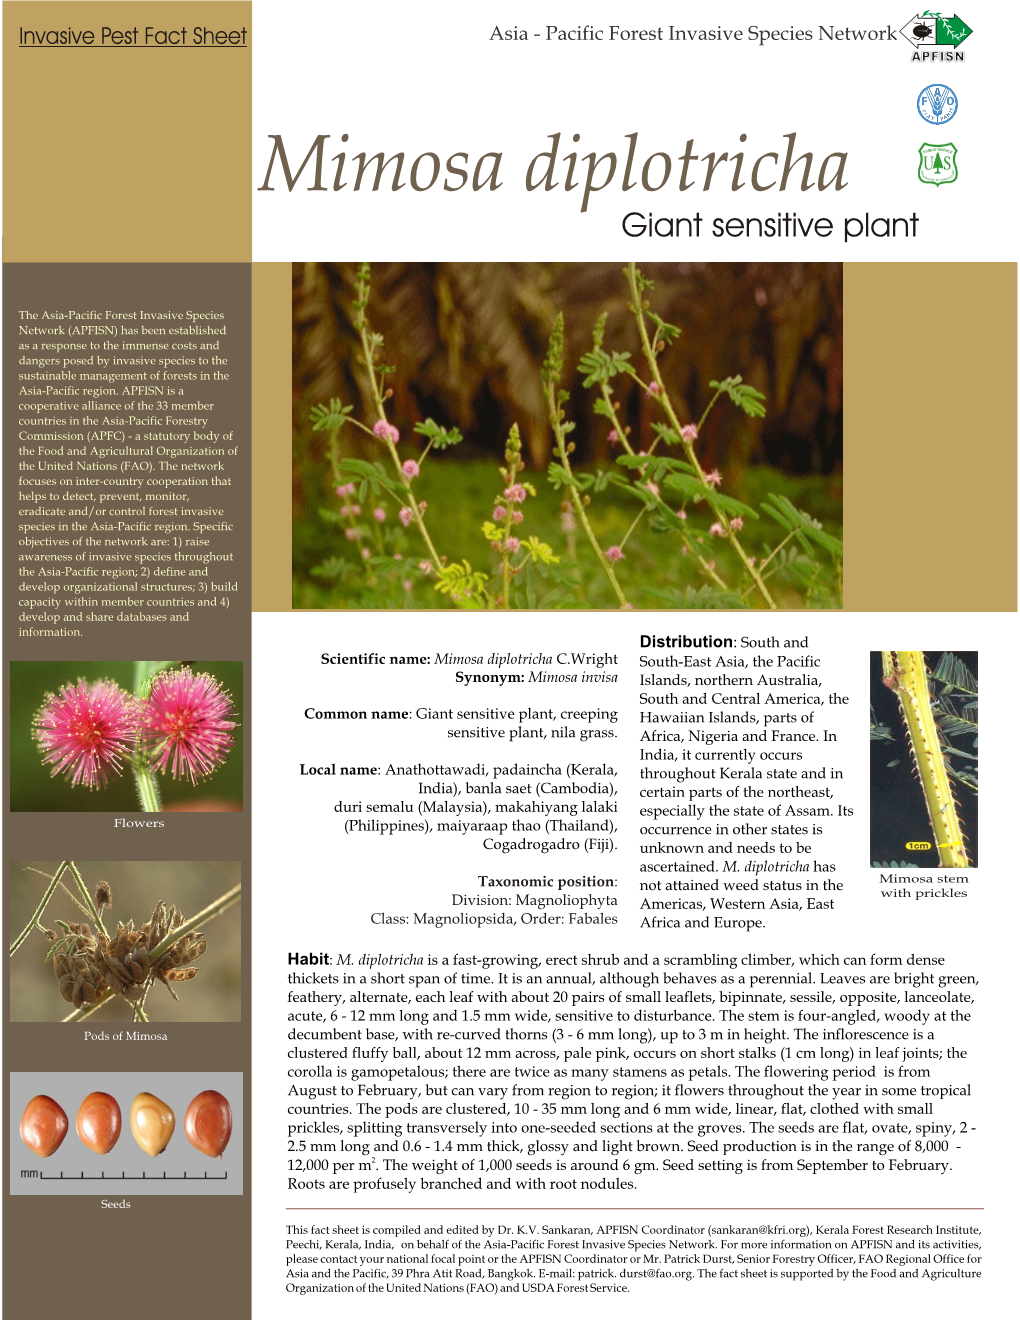 Mimosa Diplotricha Giant Sensitive Plant